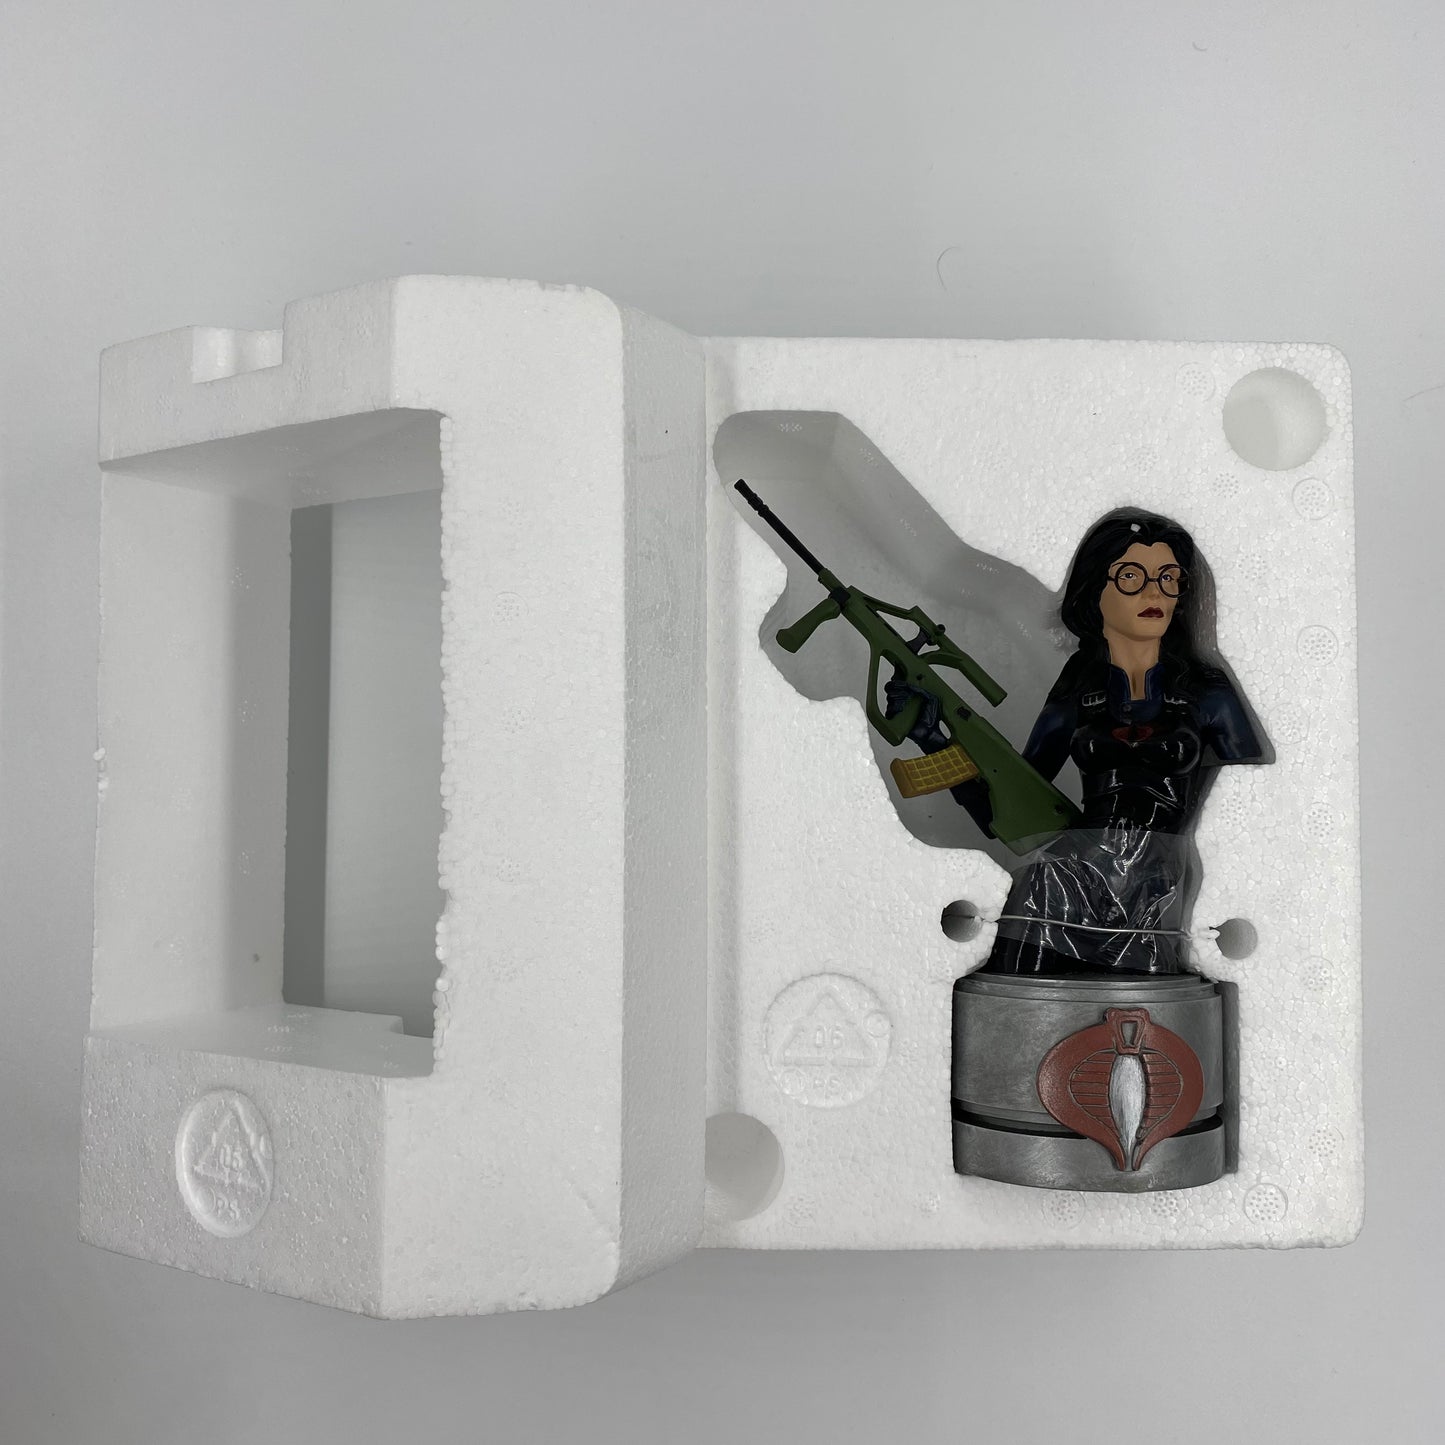 G.I. Joe Baroness mini resin bust (2002) Palisades